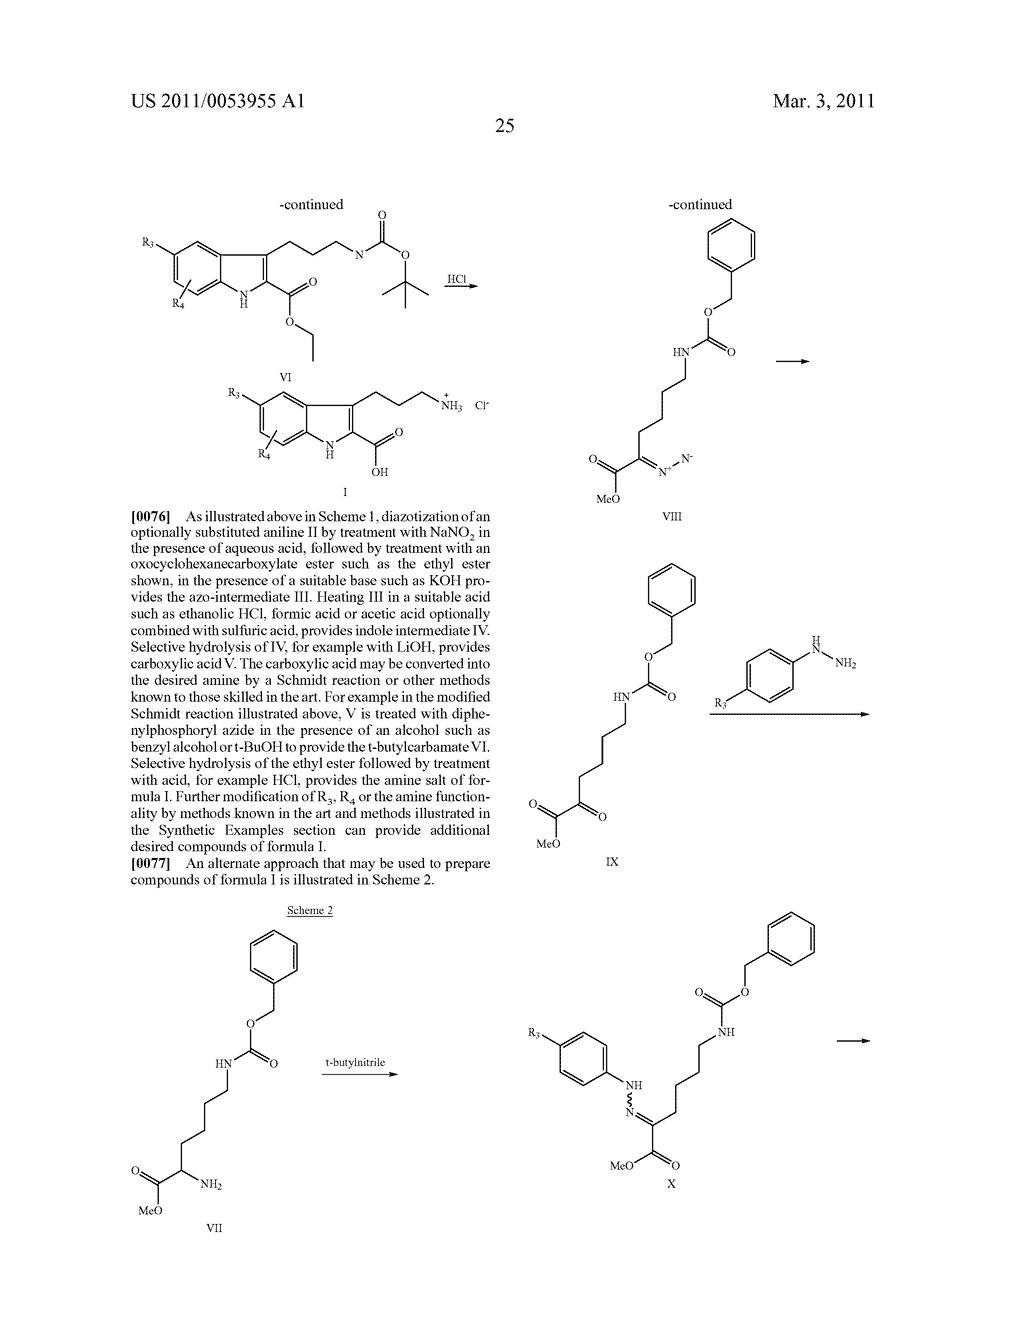 ANTI-CYTOKINE HETEROCYCLIC COMPOUNDS - diagram, schematic, and image 26